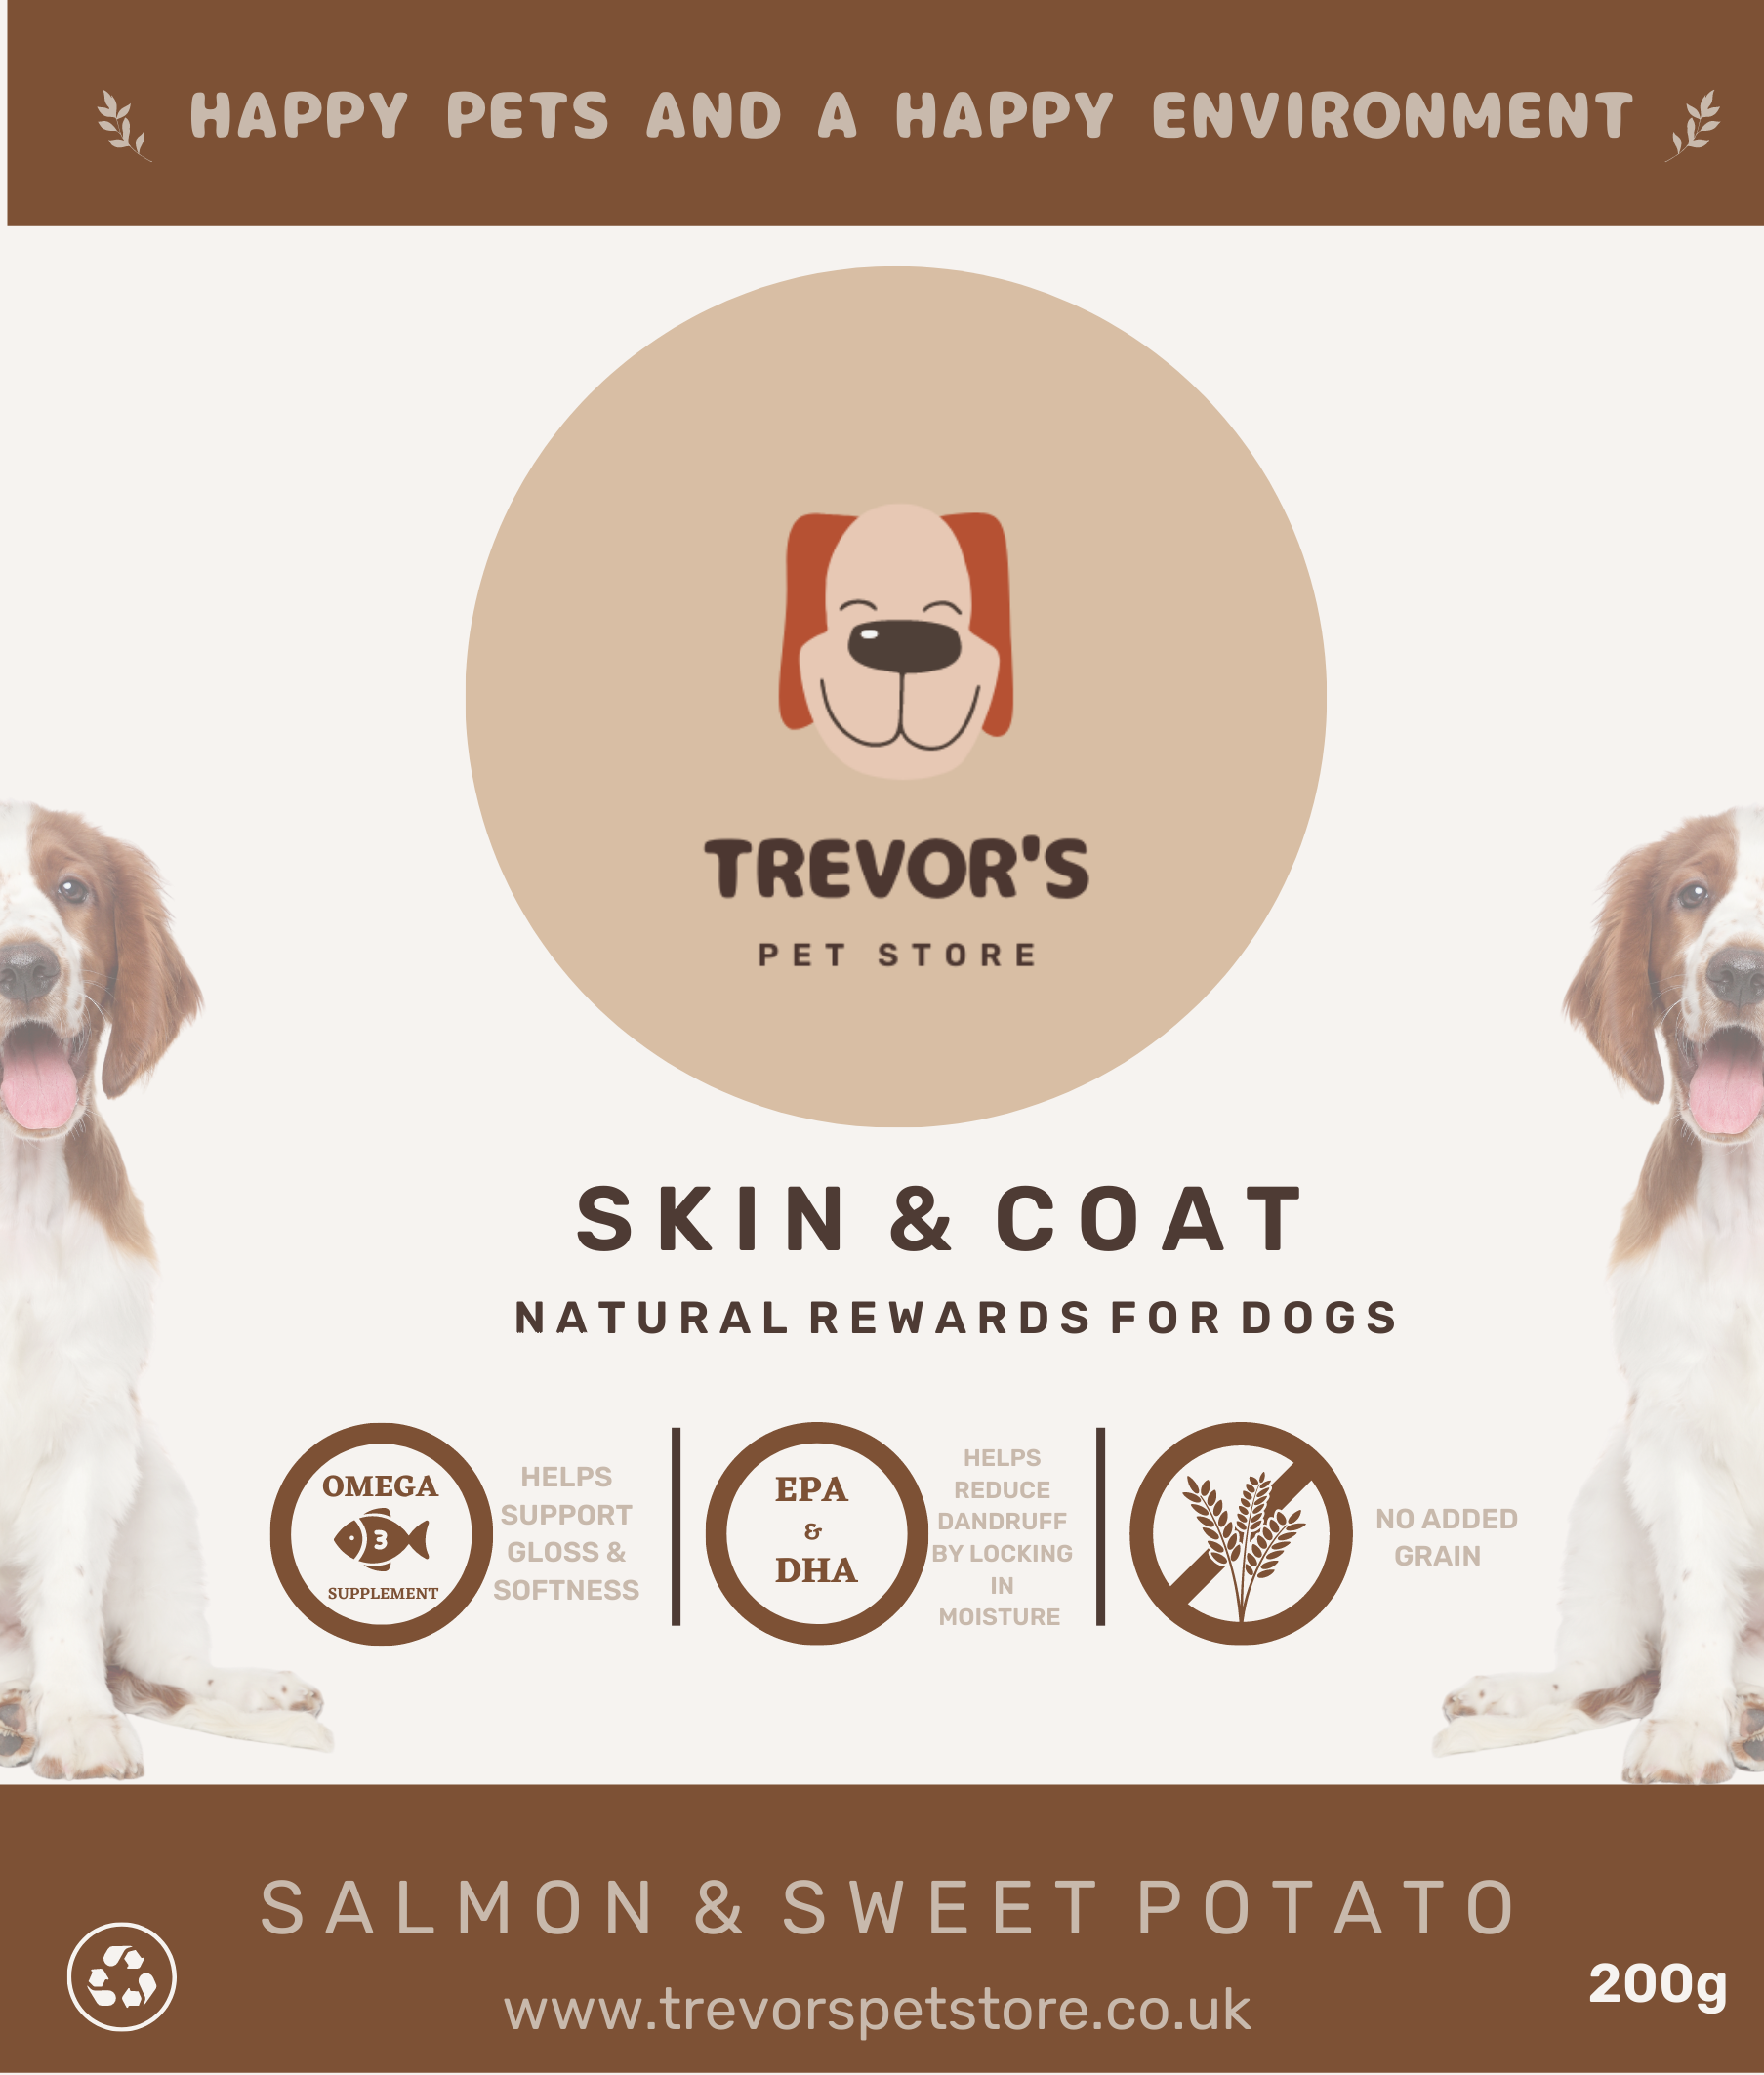 Skin & Coat Rewards - Salmon & Sweet Potato